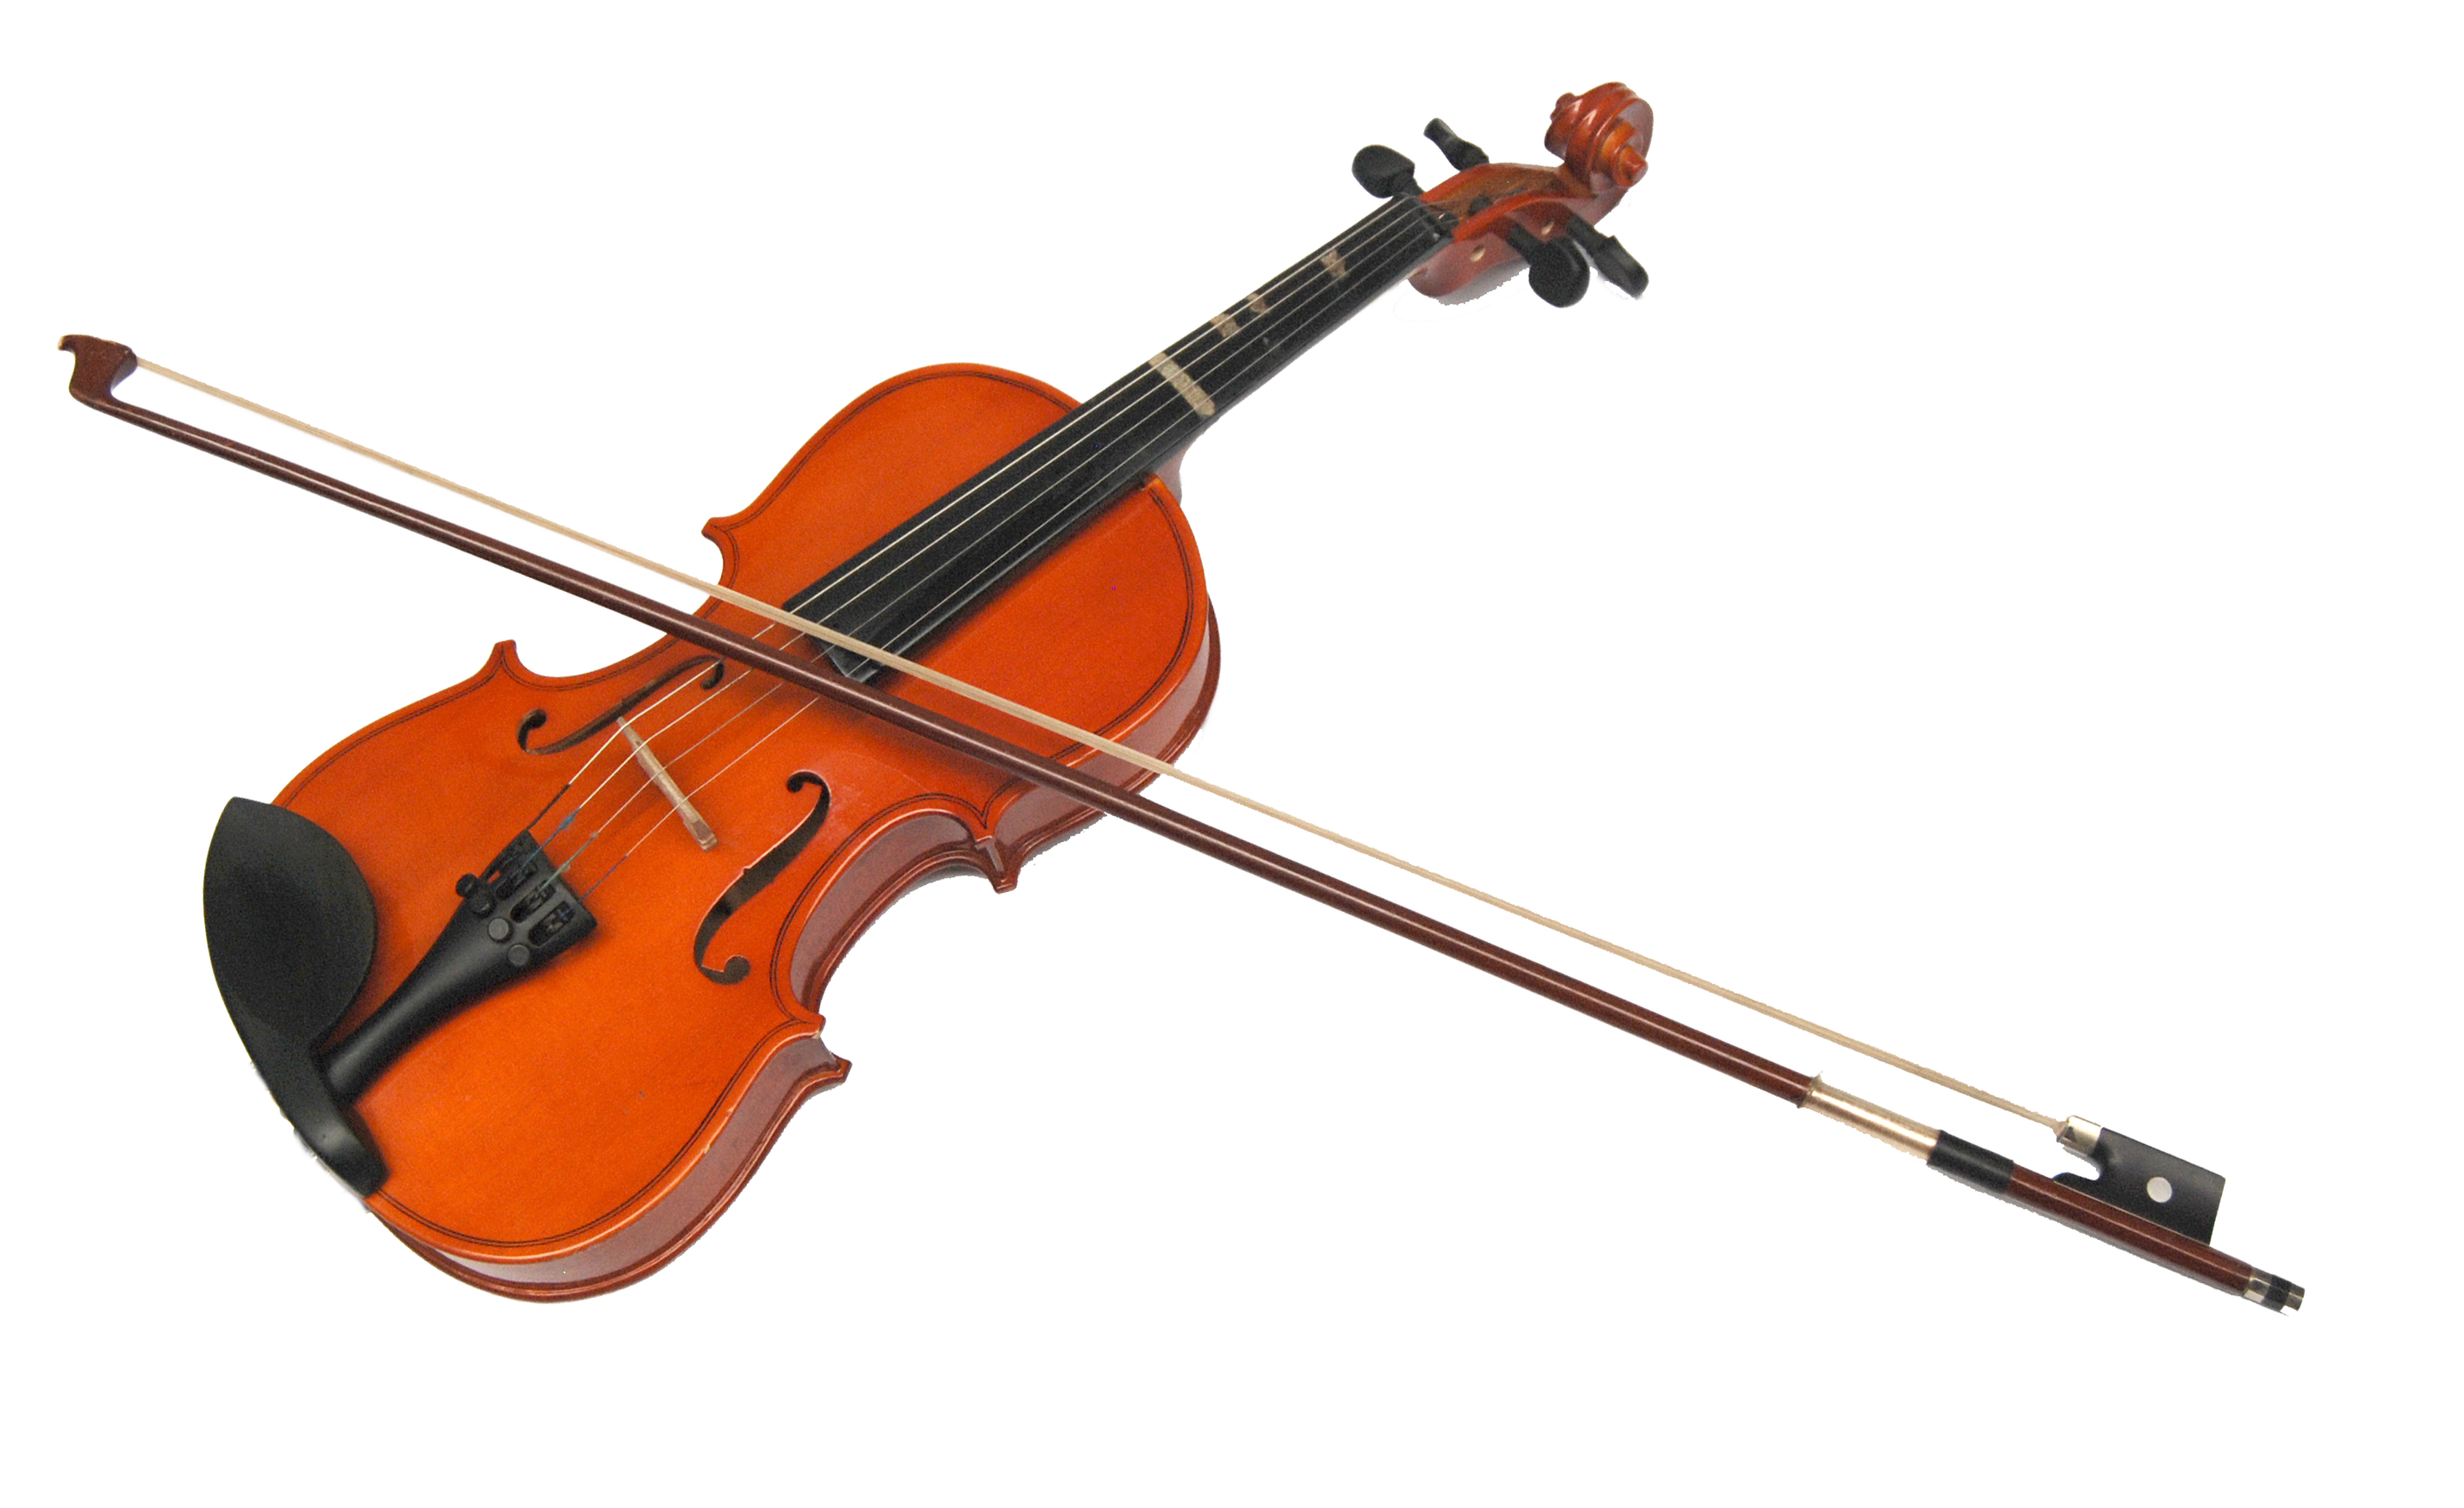 Violin PNG Image